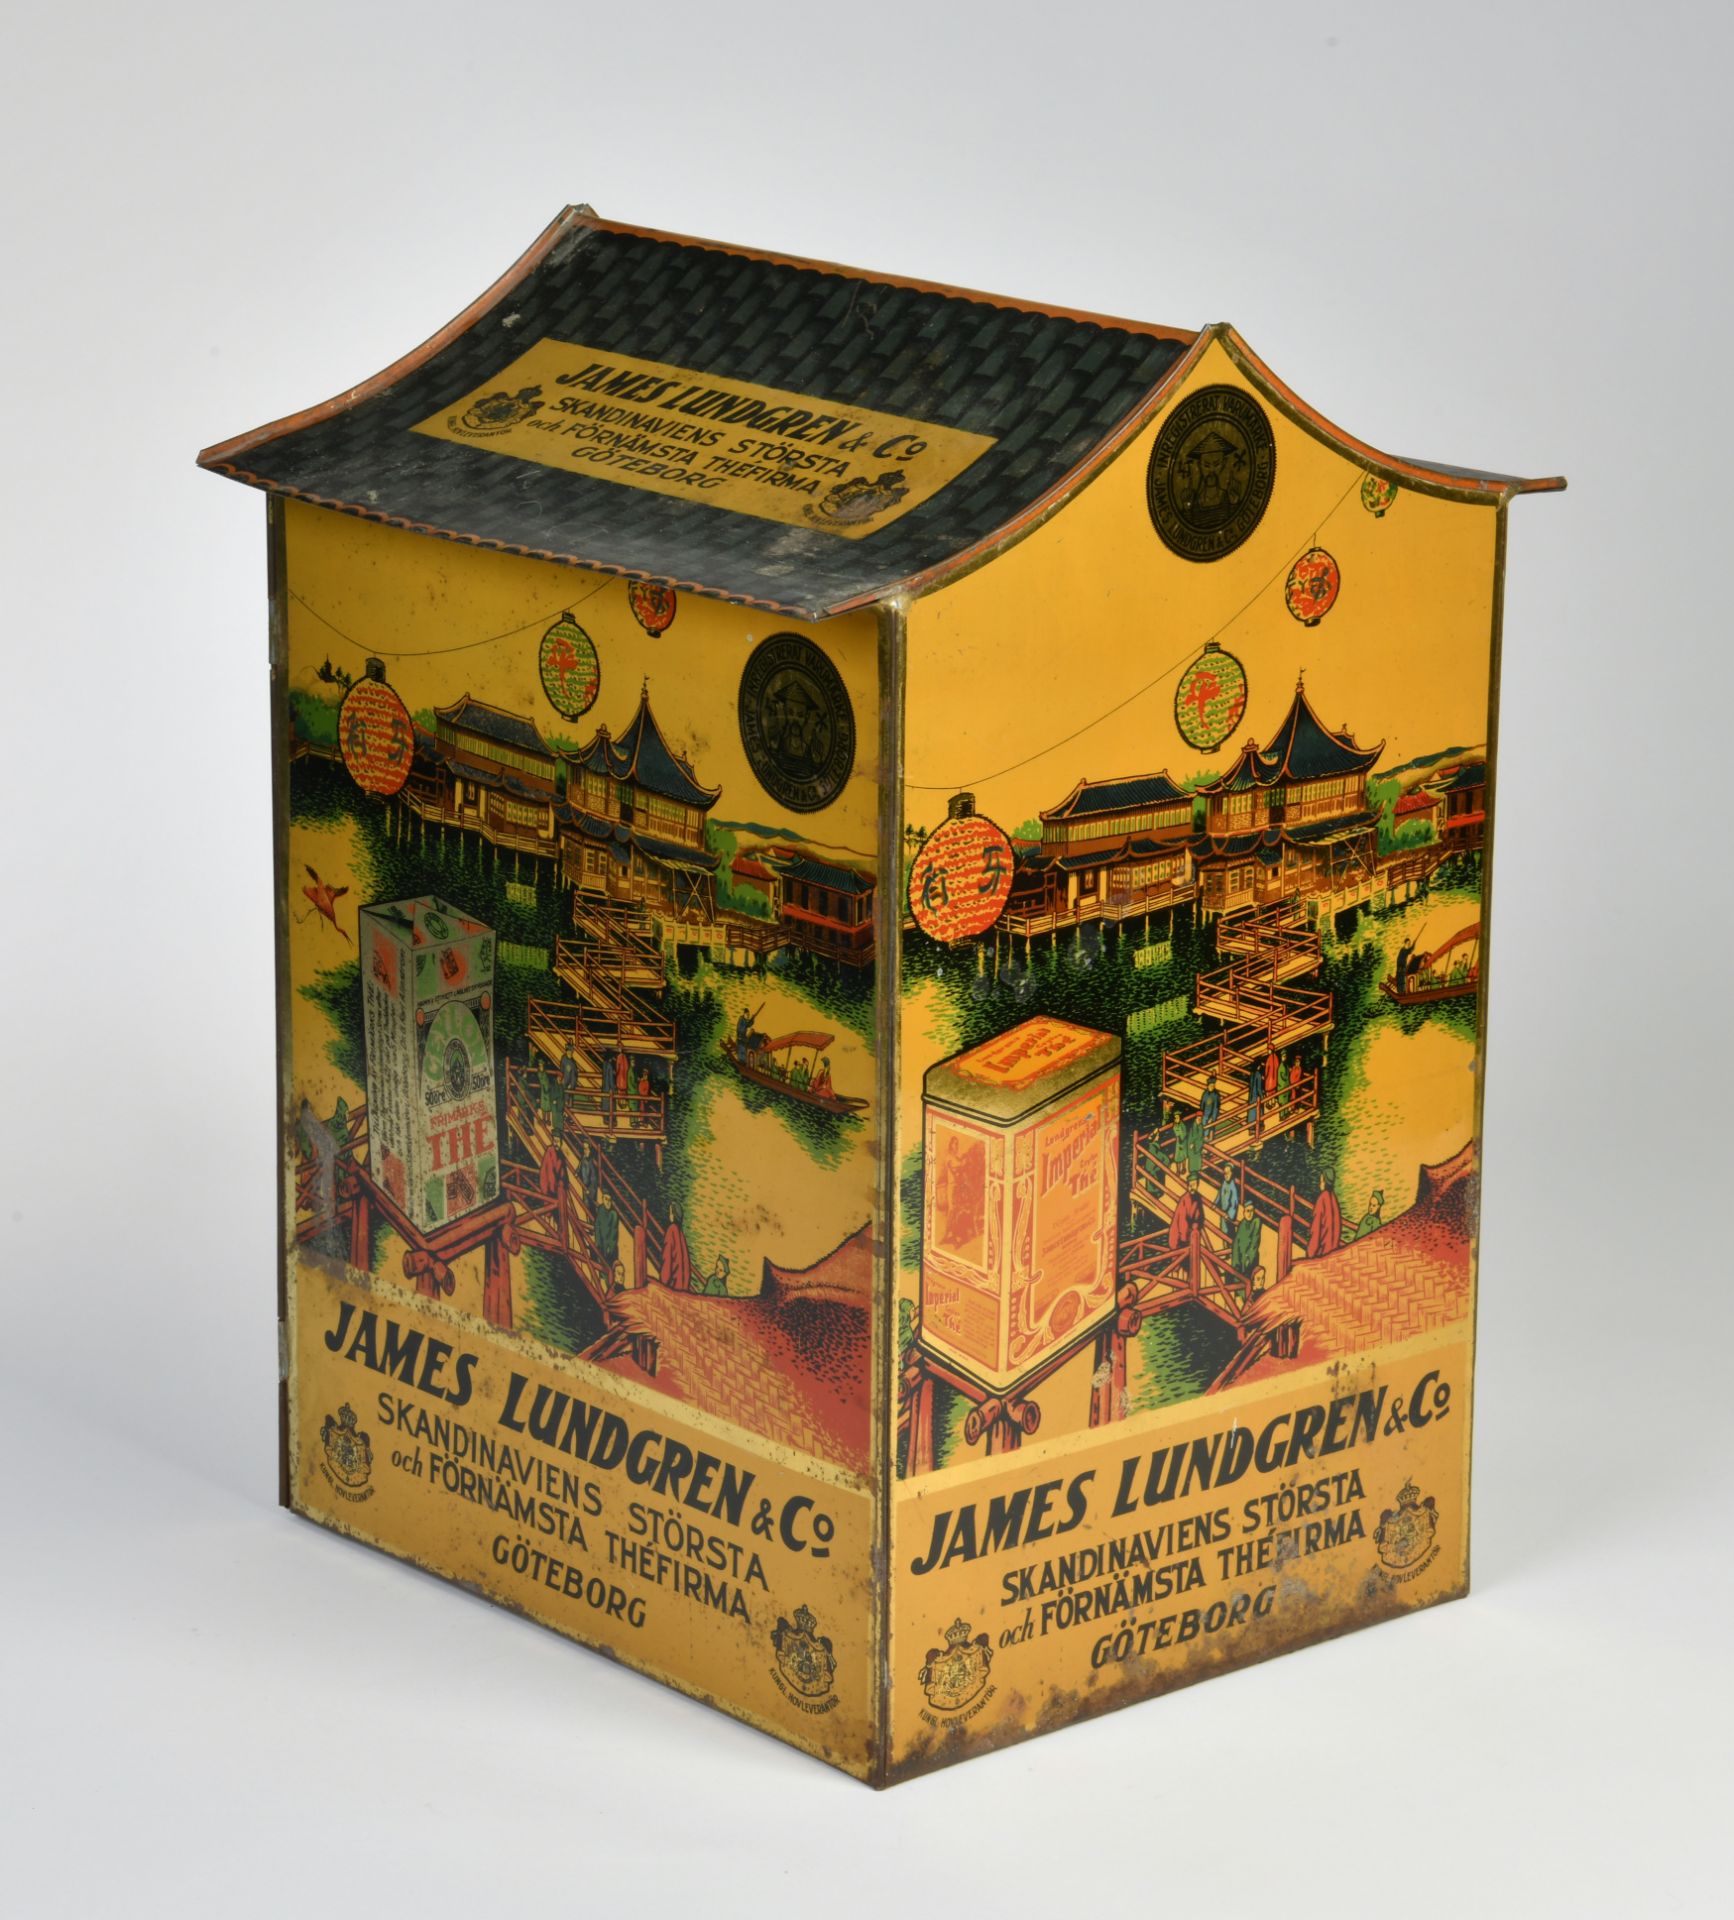 James Lundgren & Co, tea tin can, Sweden, 20s, 31x25x34 cm, one shelf missing, paint d. - Image 2 of 2